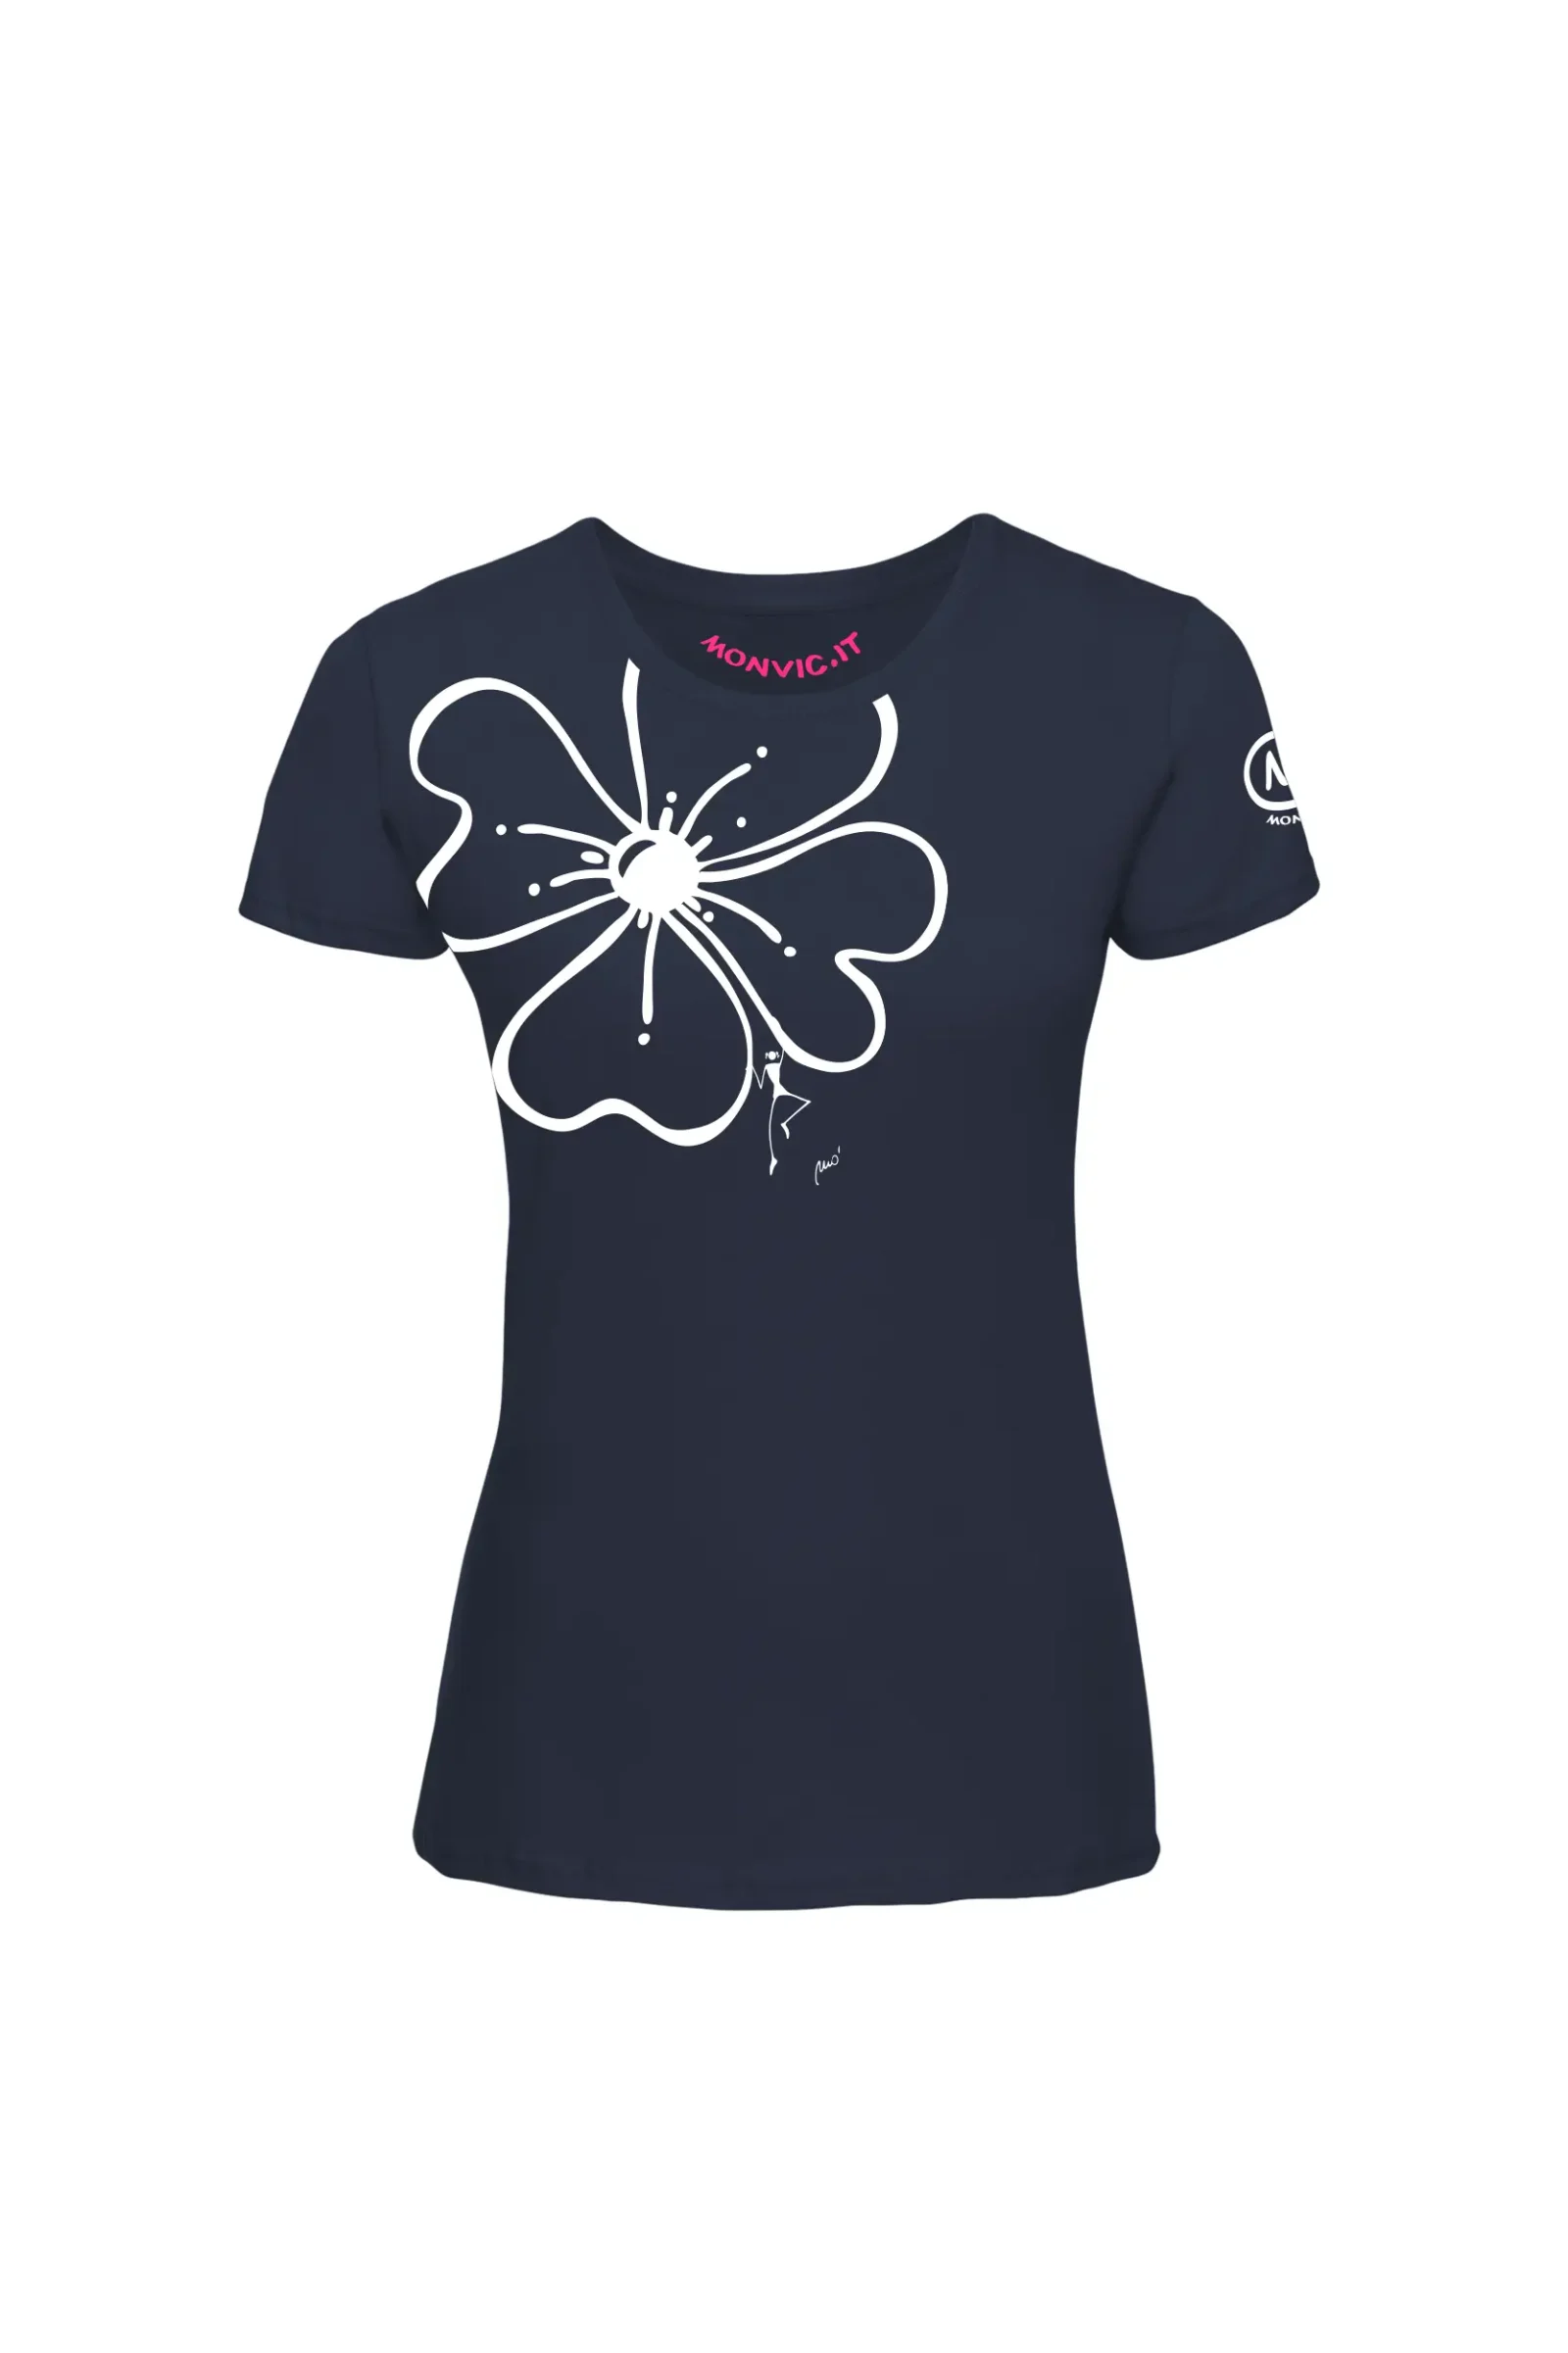 Women's climbing t-shirt - navy blue cotton - "Superflower" SHARON MONVIC